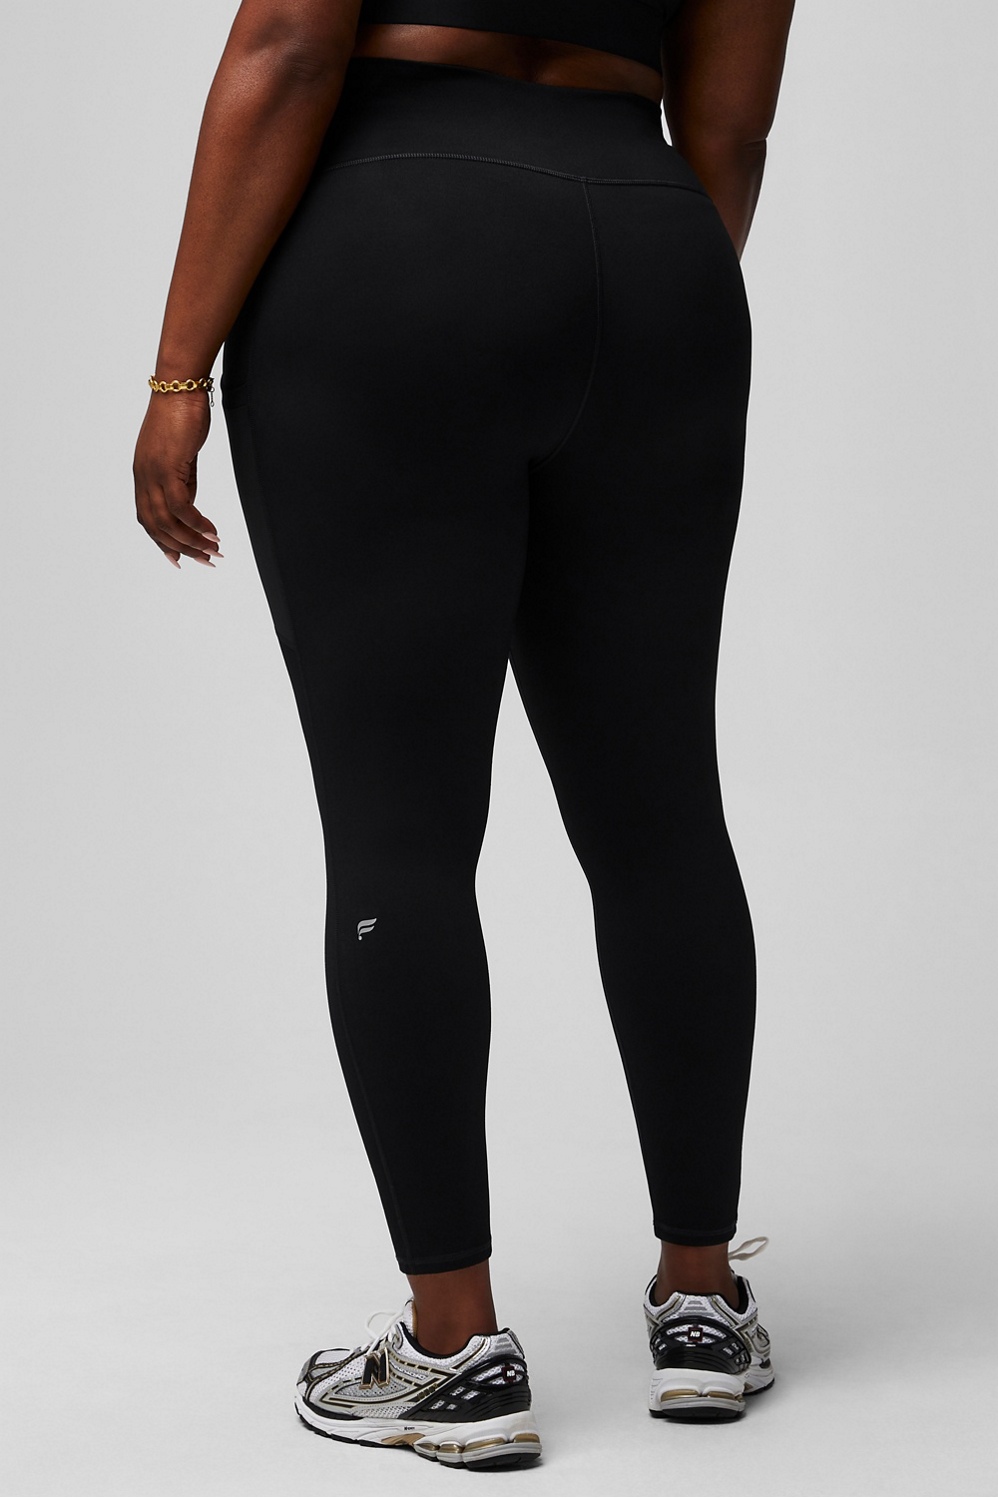 Black Milk Battle Pants Athletic Leggings Size Large Black NWOT with  pockets